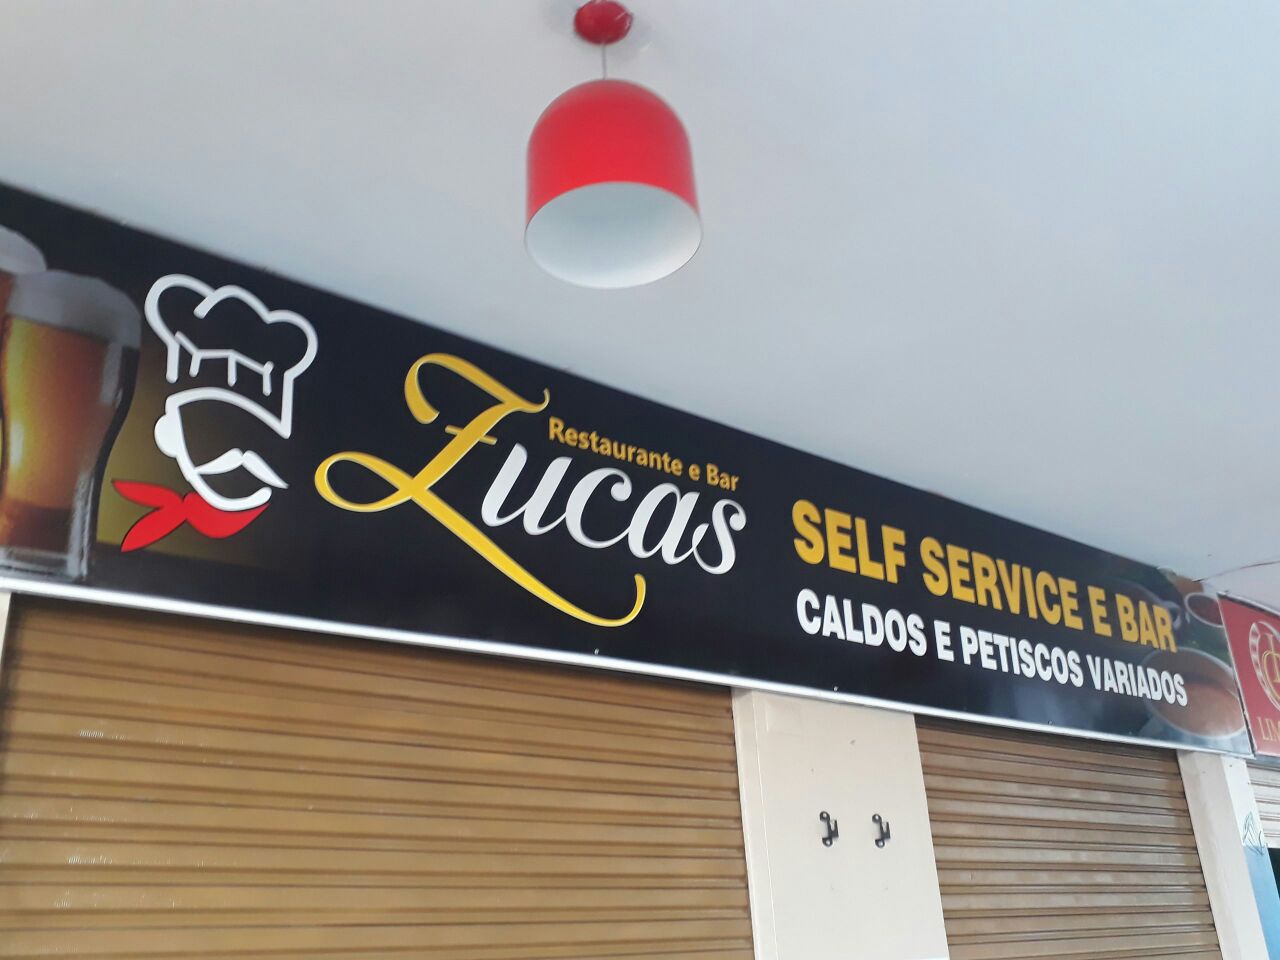 Restaurante e Bar Zucas, caldos, peticos variados, Bloco B, da 411 Norte, Asa Norte, Brasília